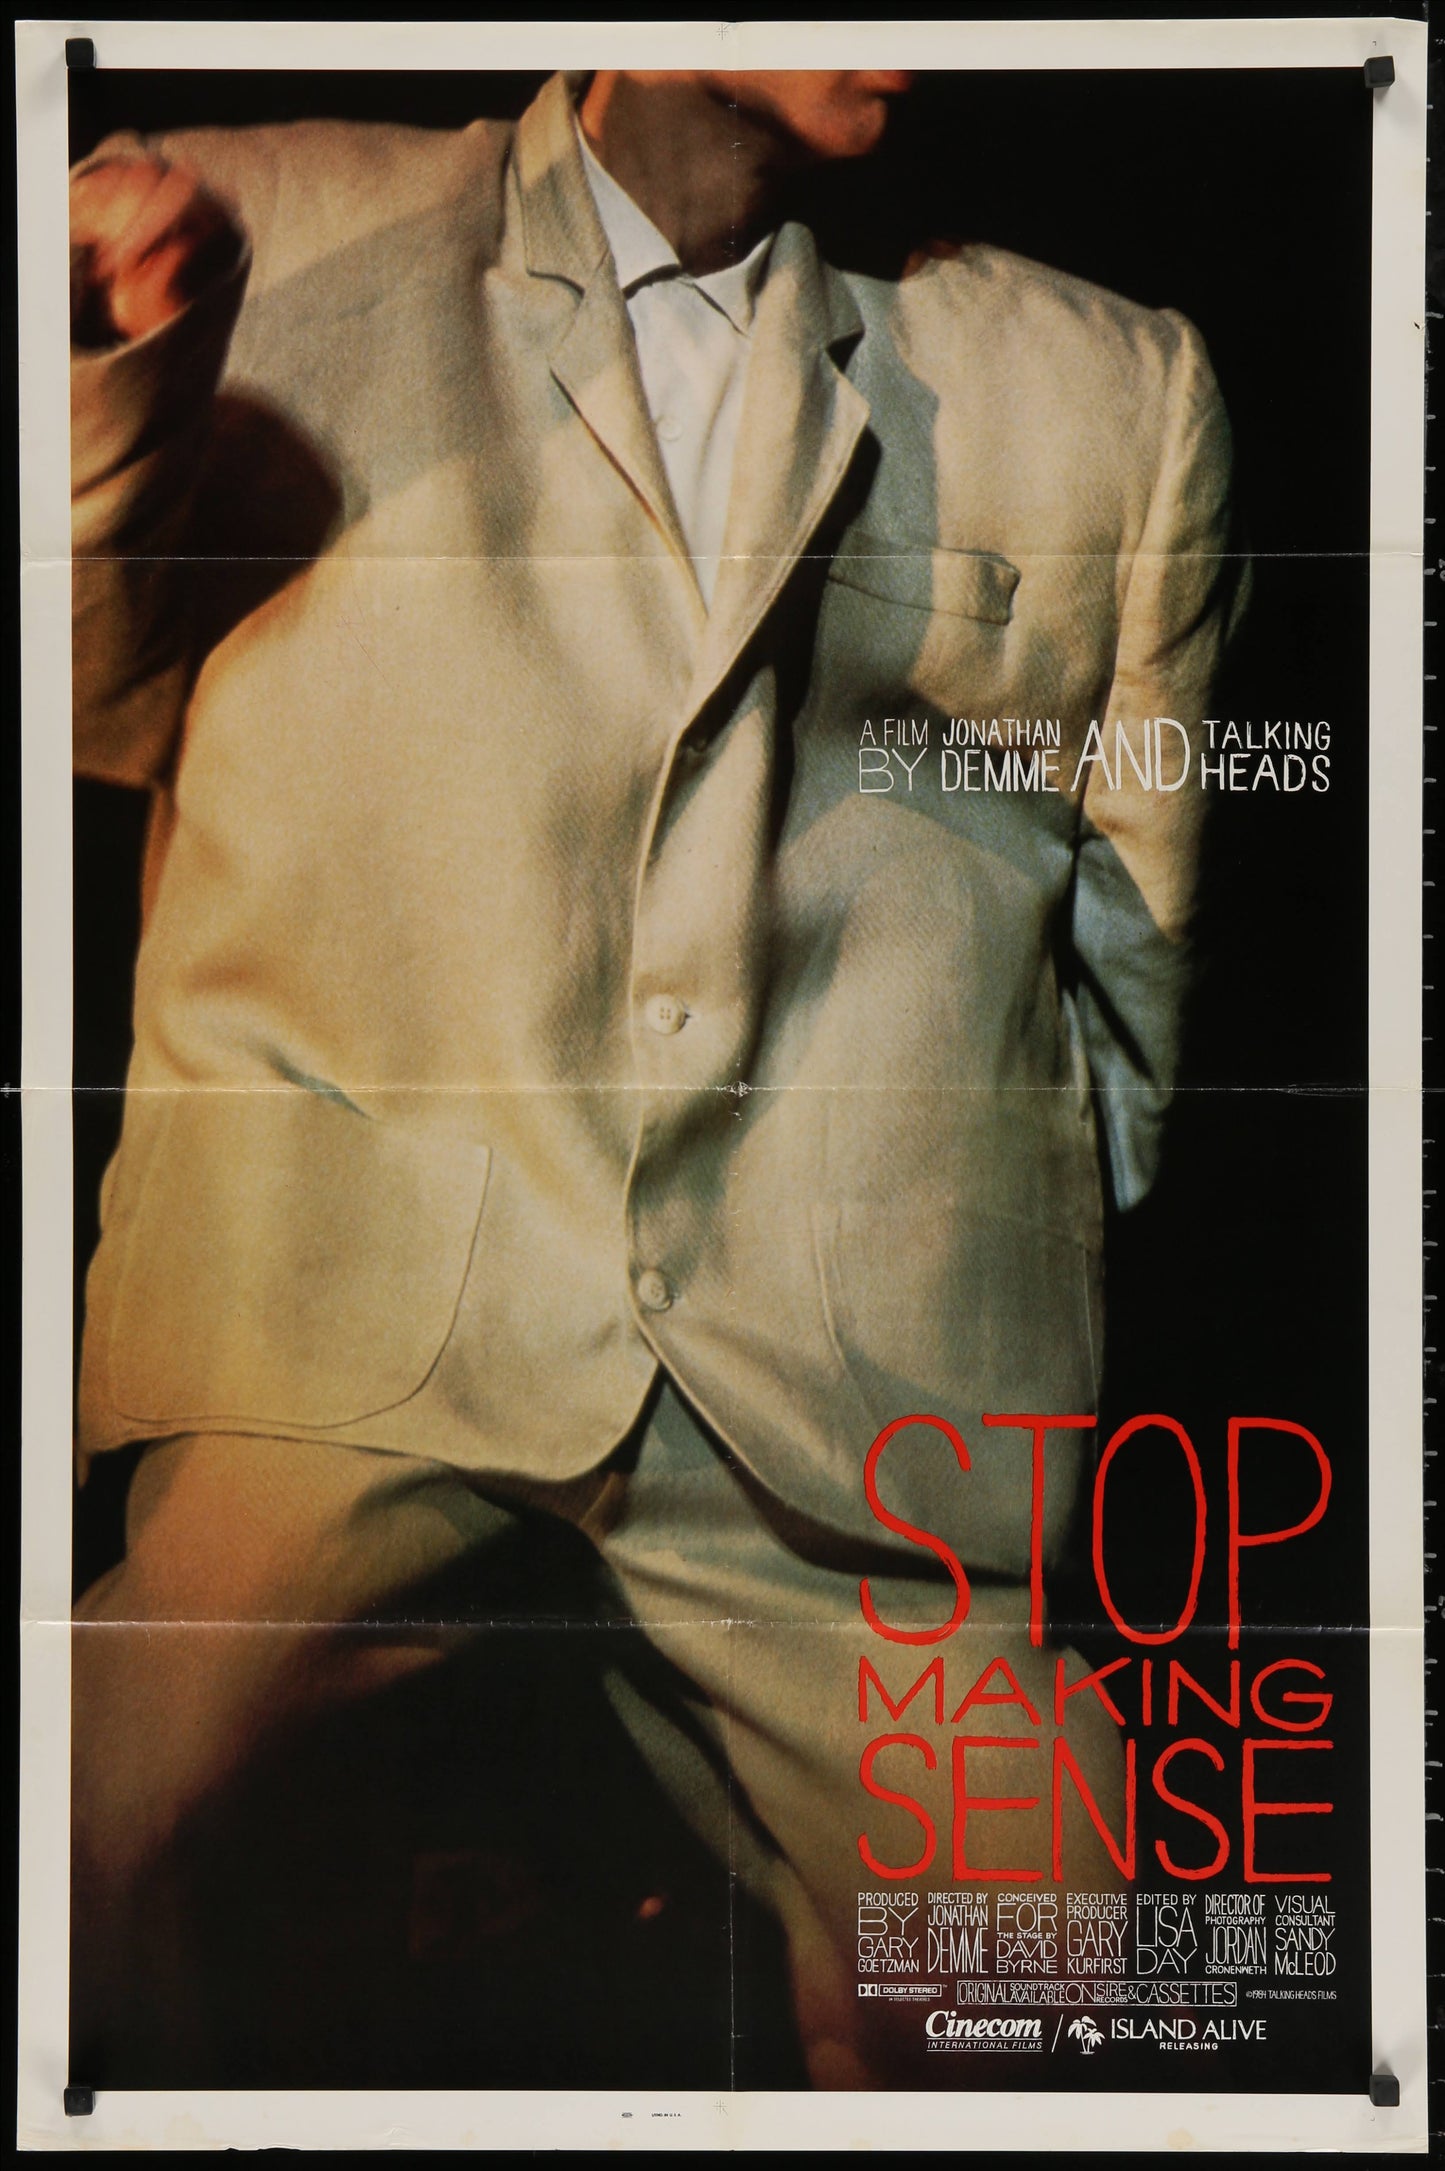 Stop Making Sense US One Sheet (1984) - ORIGINAL RELEASE - posterpalace.com